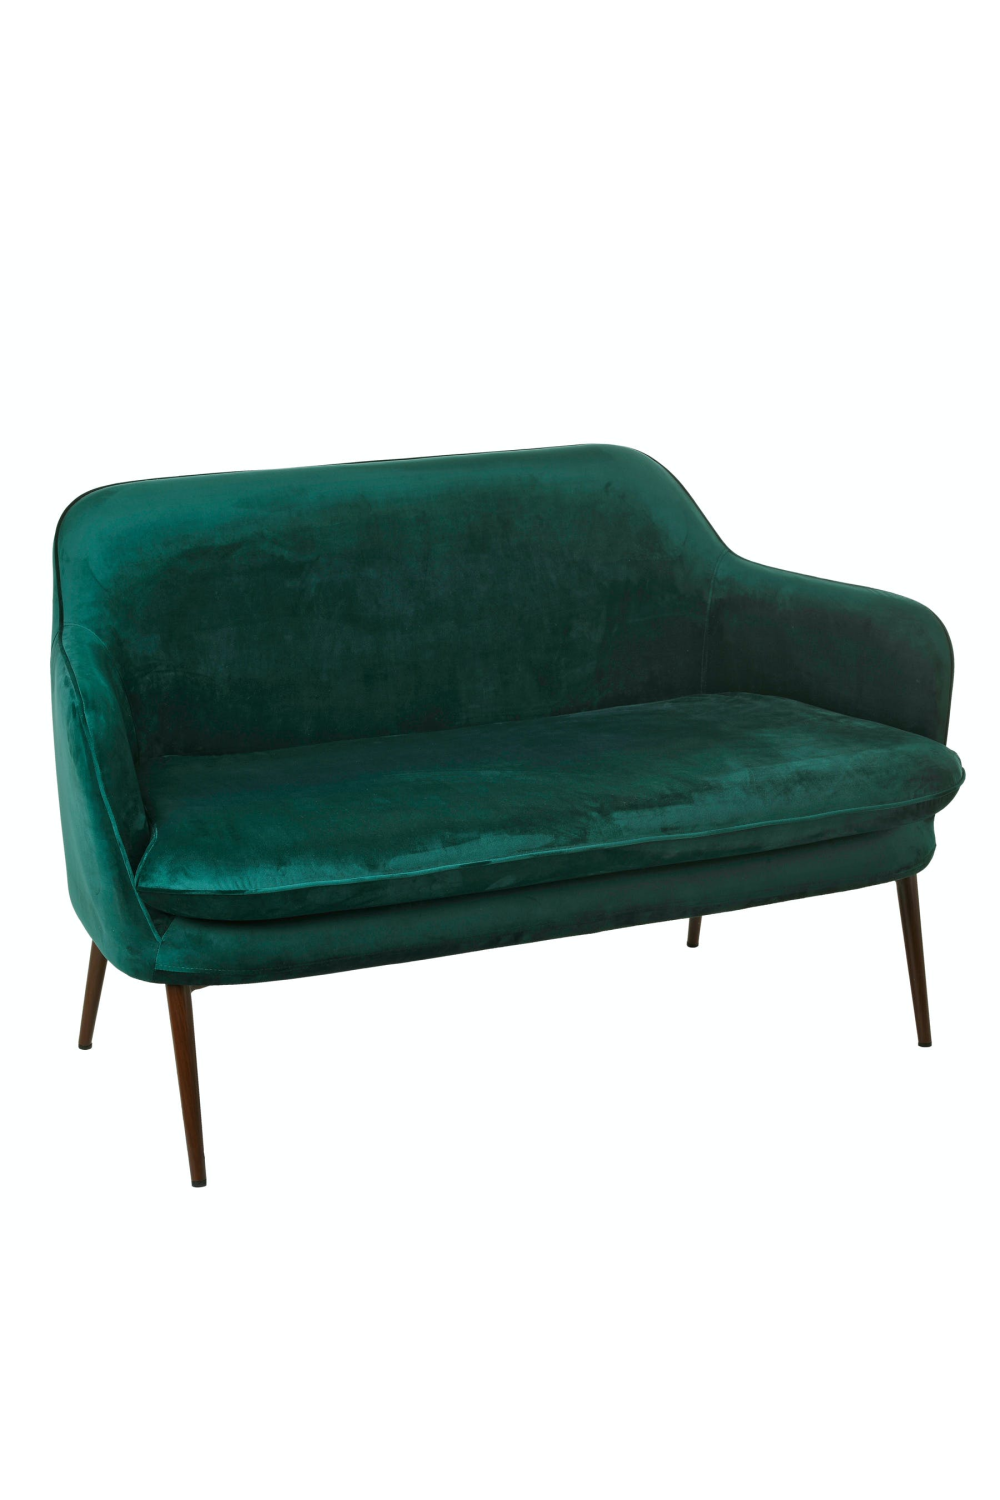 stijl verdrietig ik wil Green Velvet Sofa | Pols Potten | Dutch Furniture